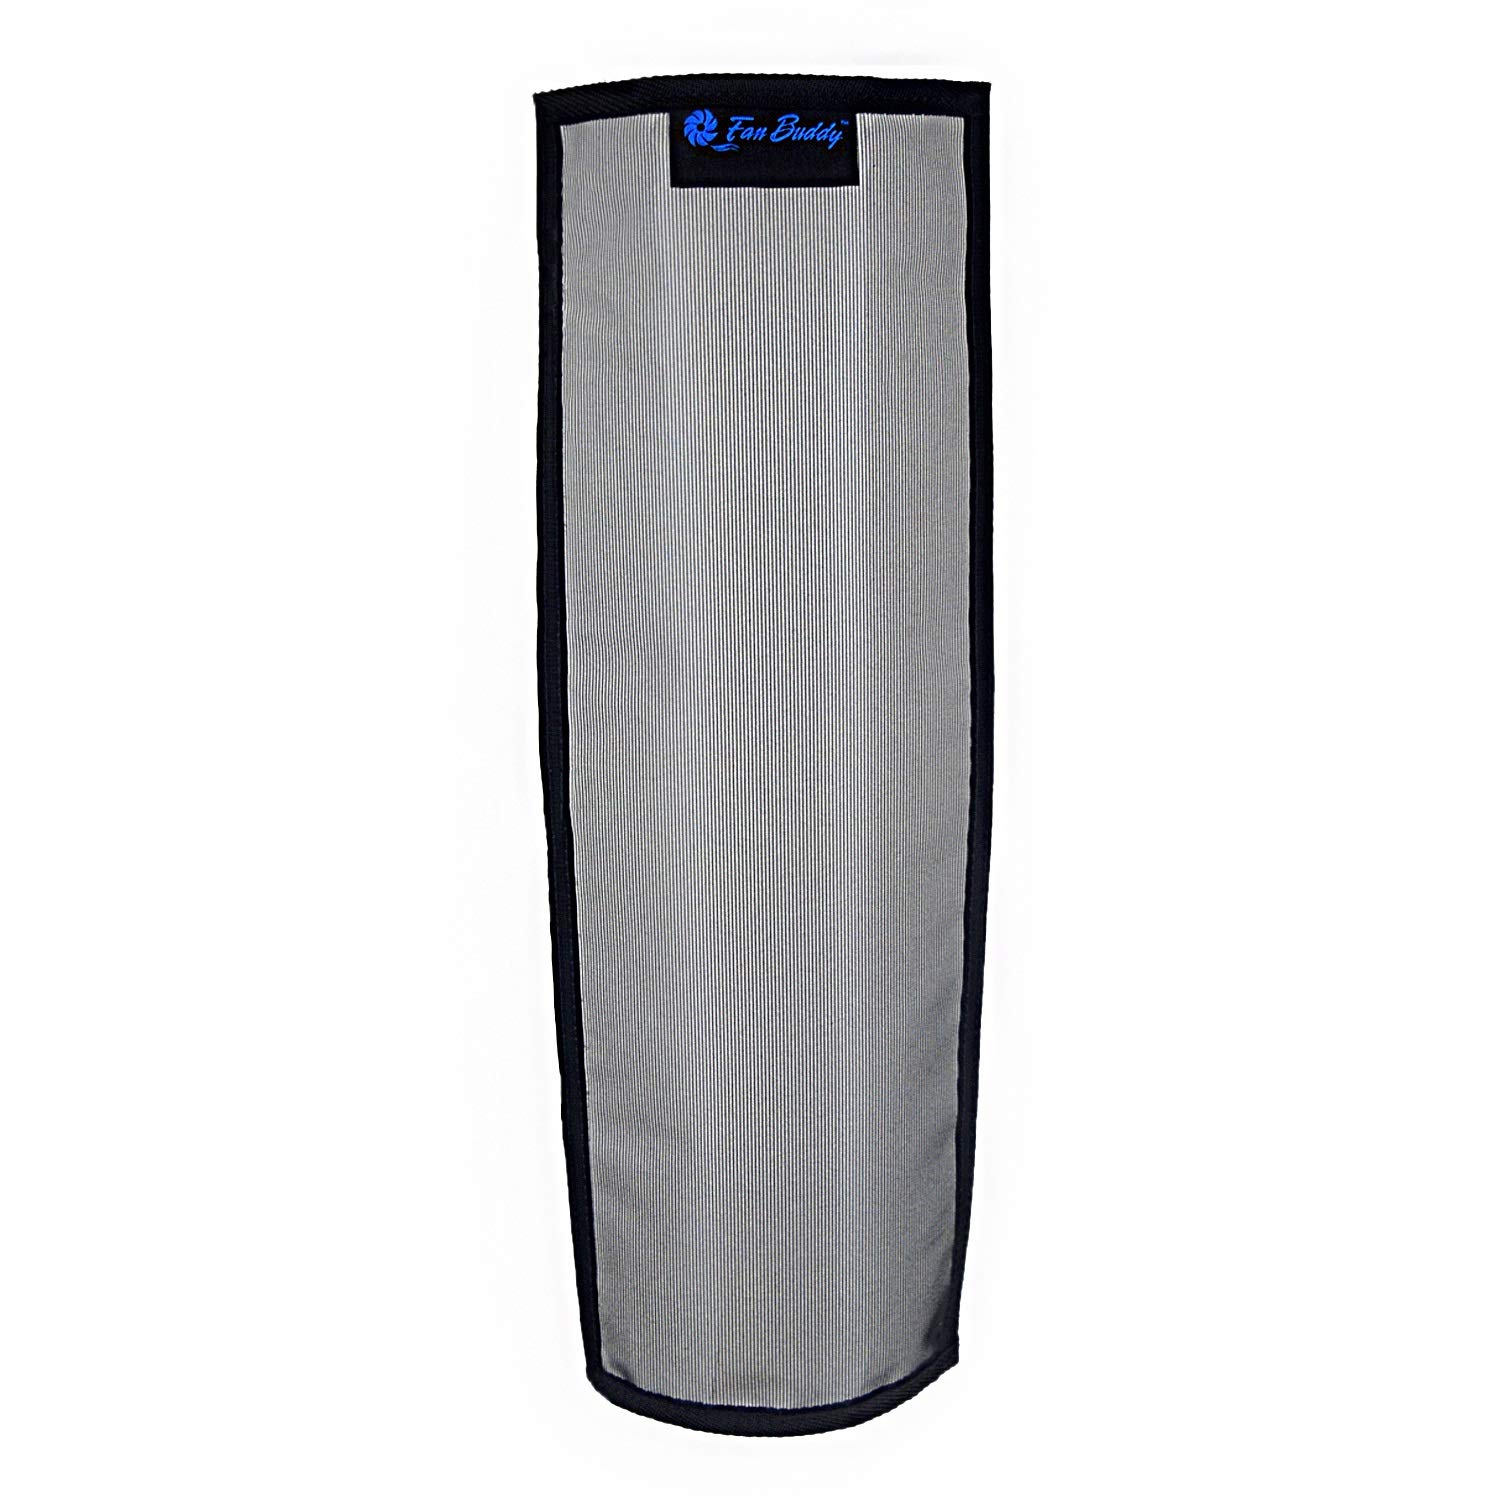 PollenTec Tower Fan Air Purifying Filter